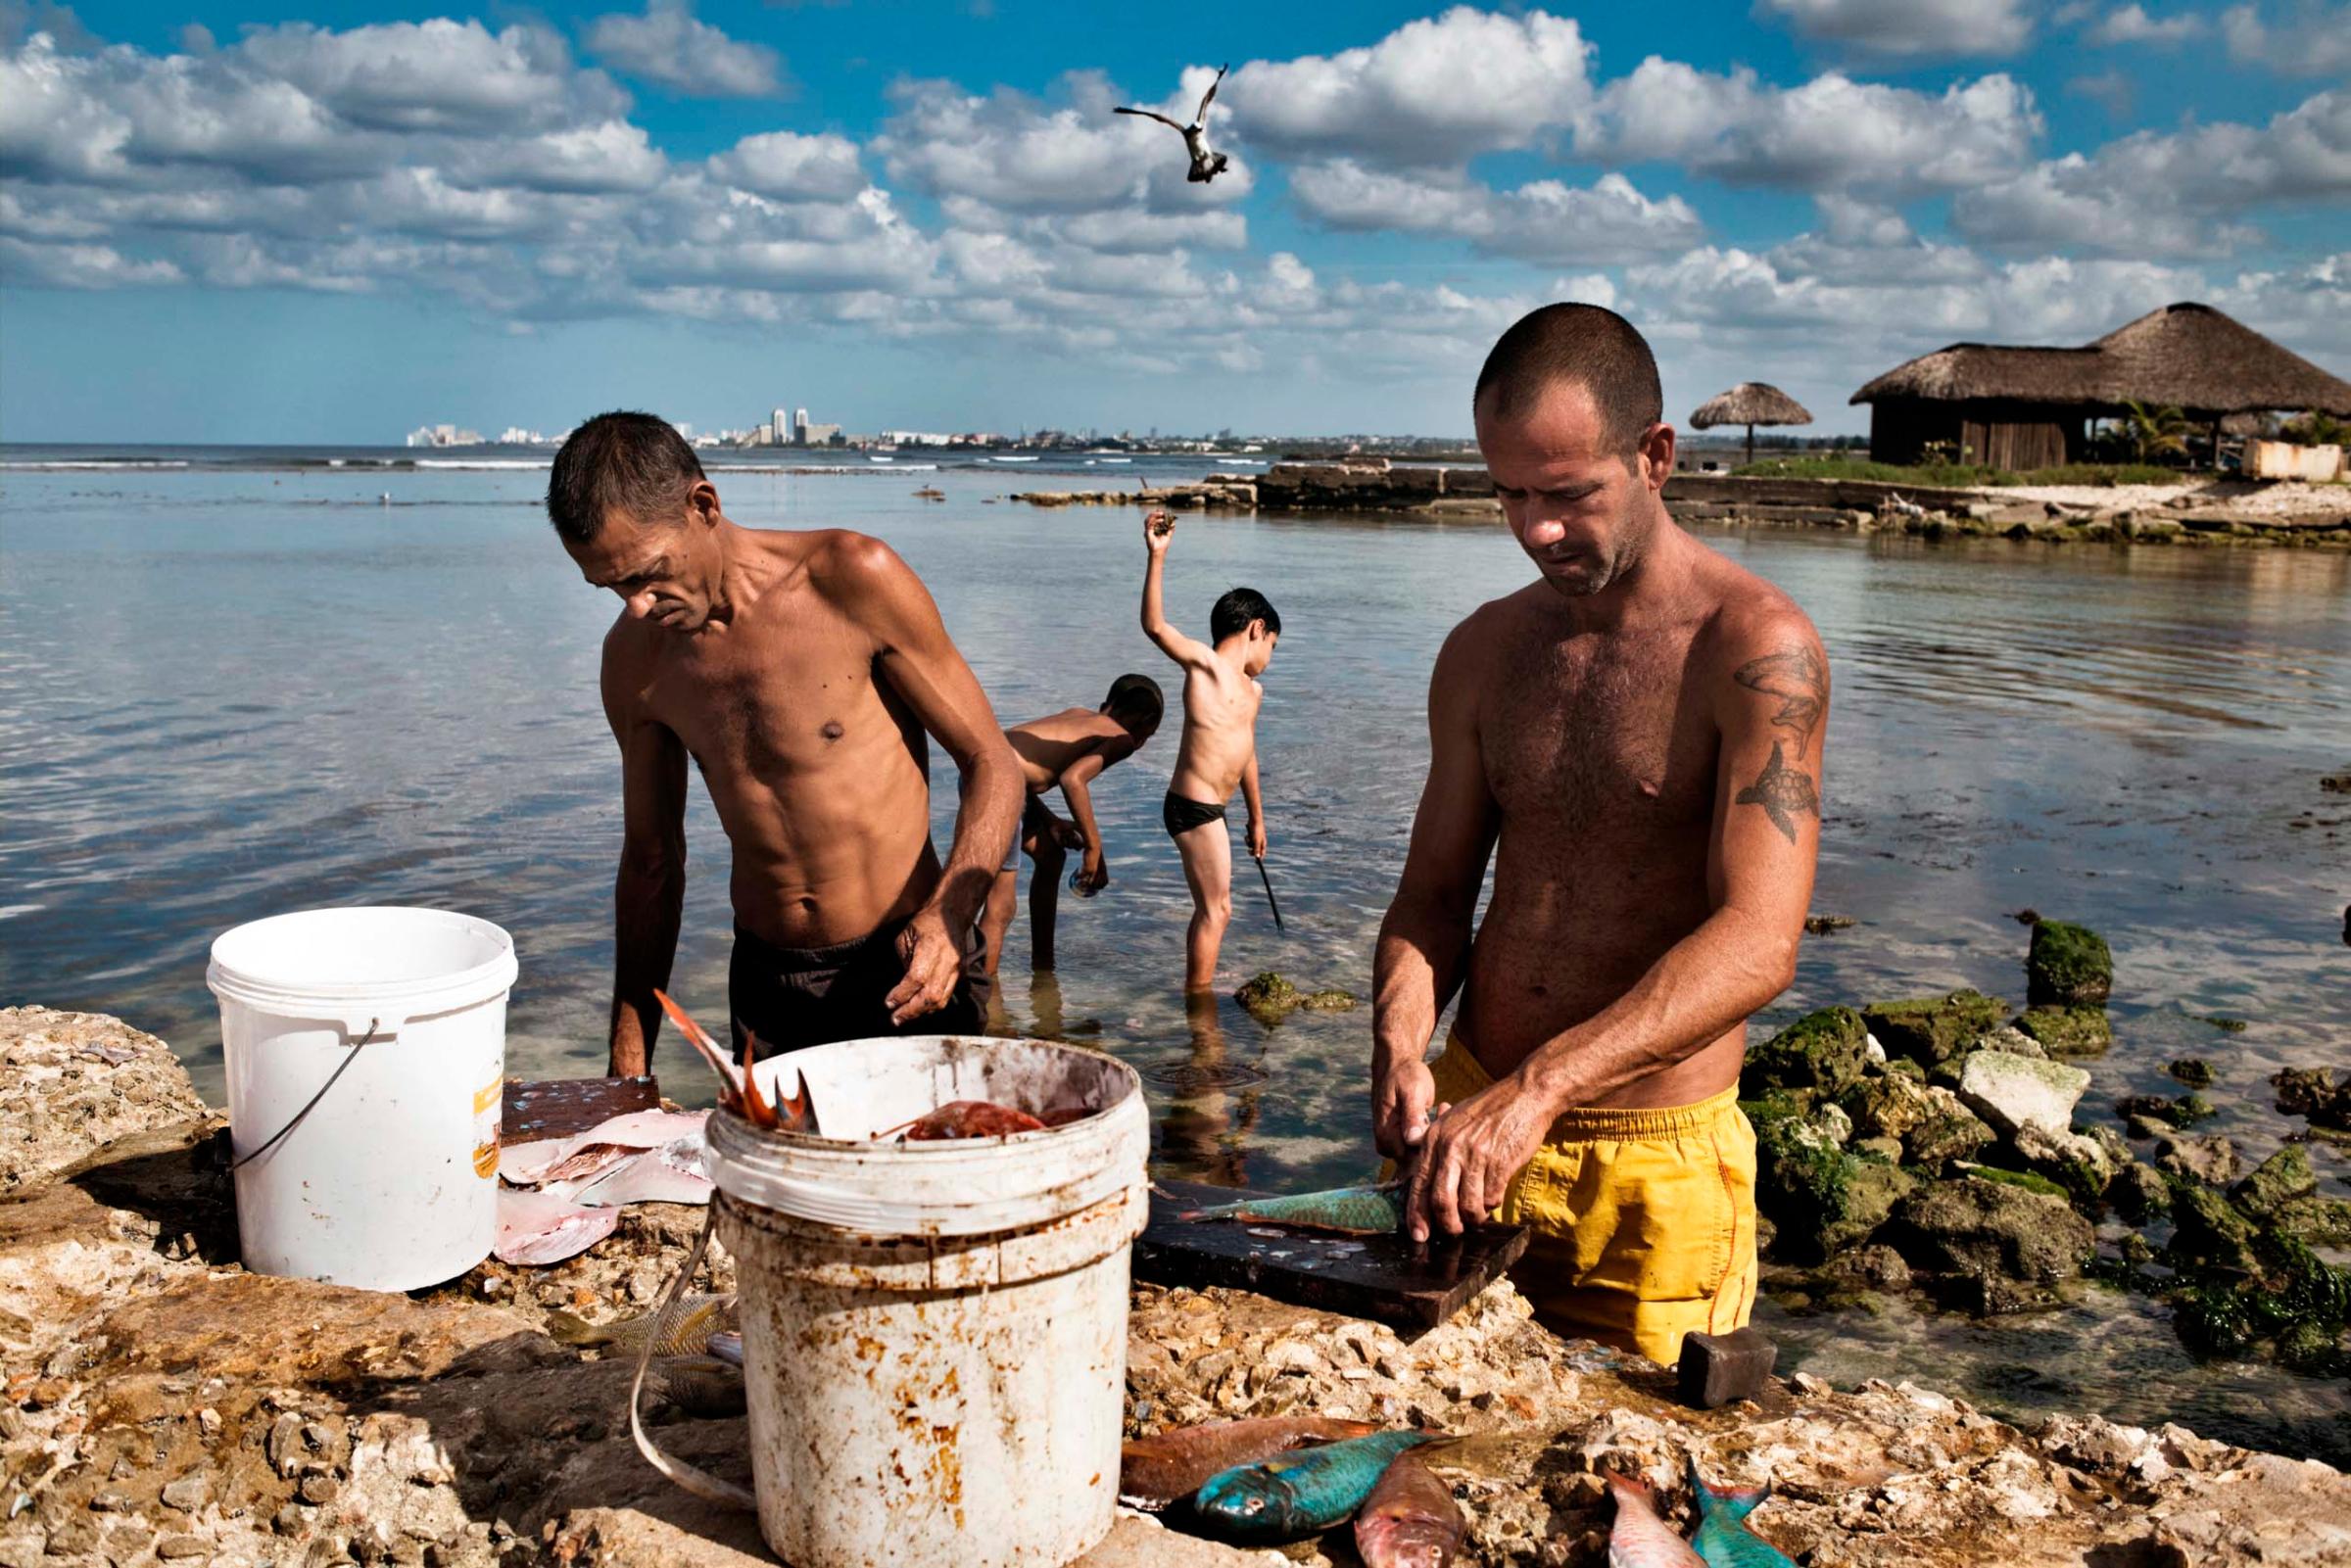 January 2015. Men clean fish, while children play by the shore, in the Jaimanitas neighborhood of Havana.